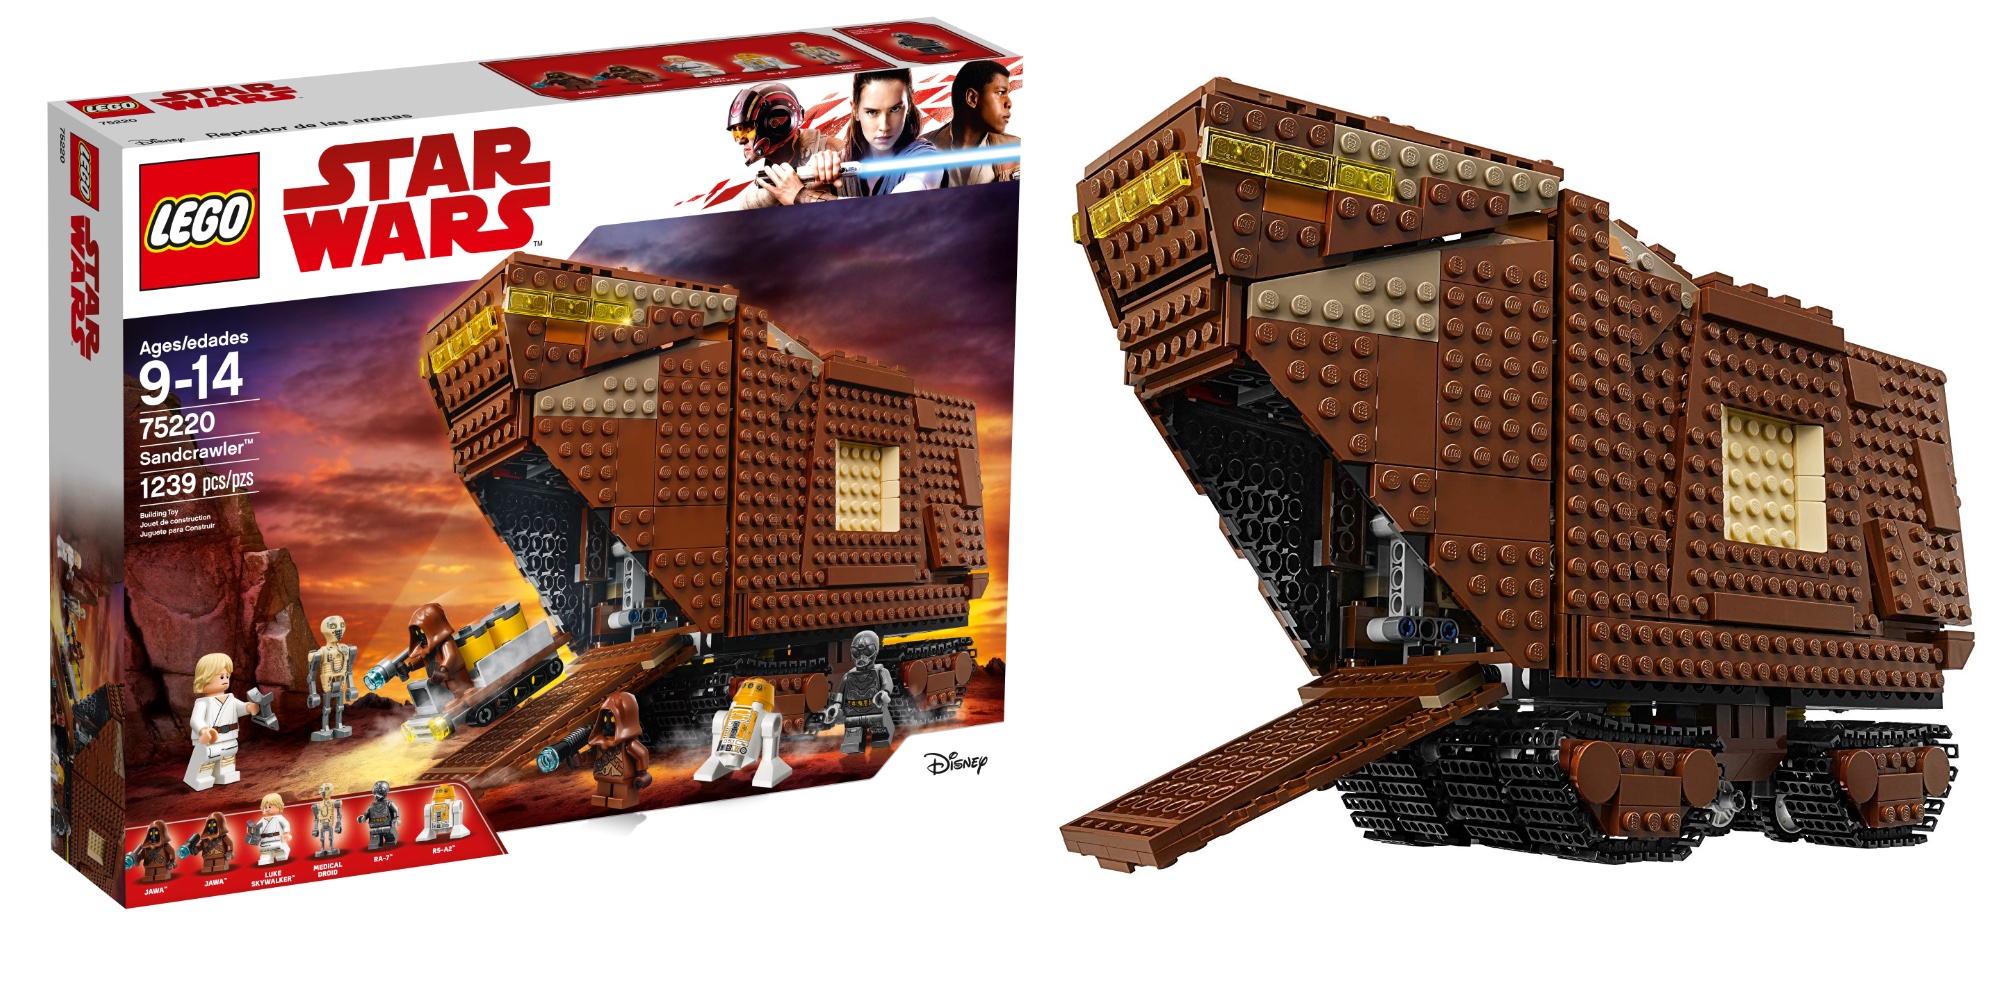 LEGO Star Wars Sandcrawler falls to 